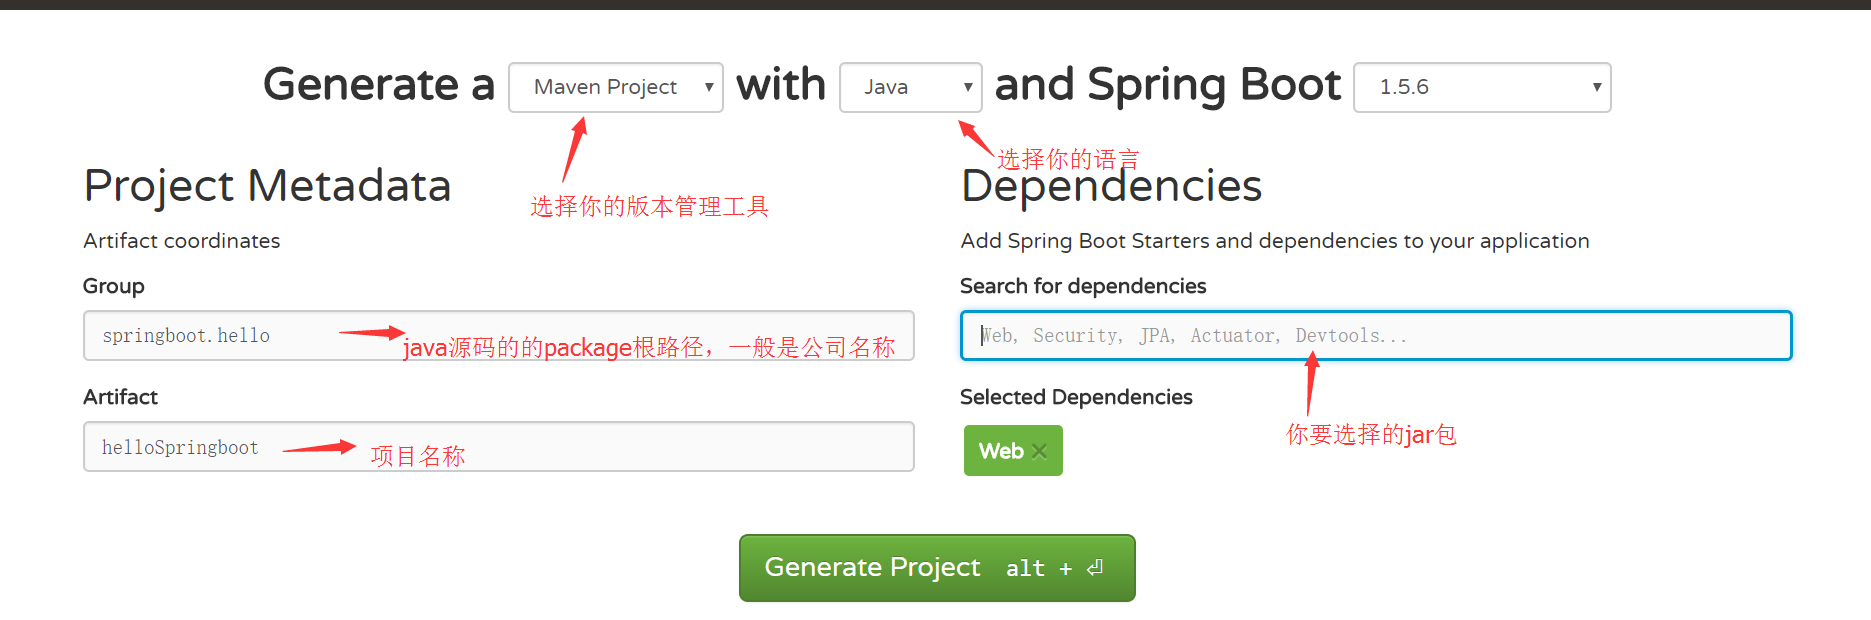 SpringBoot快速搭建web项目的示例